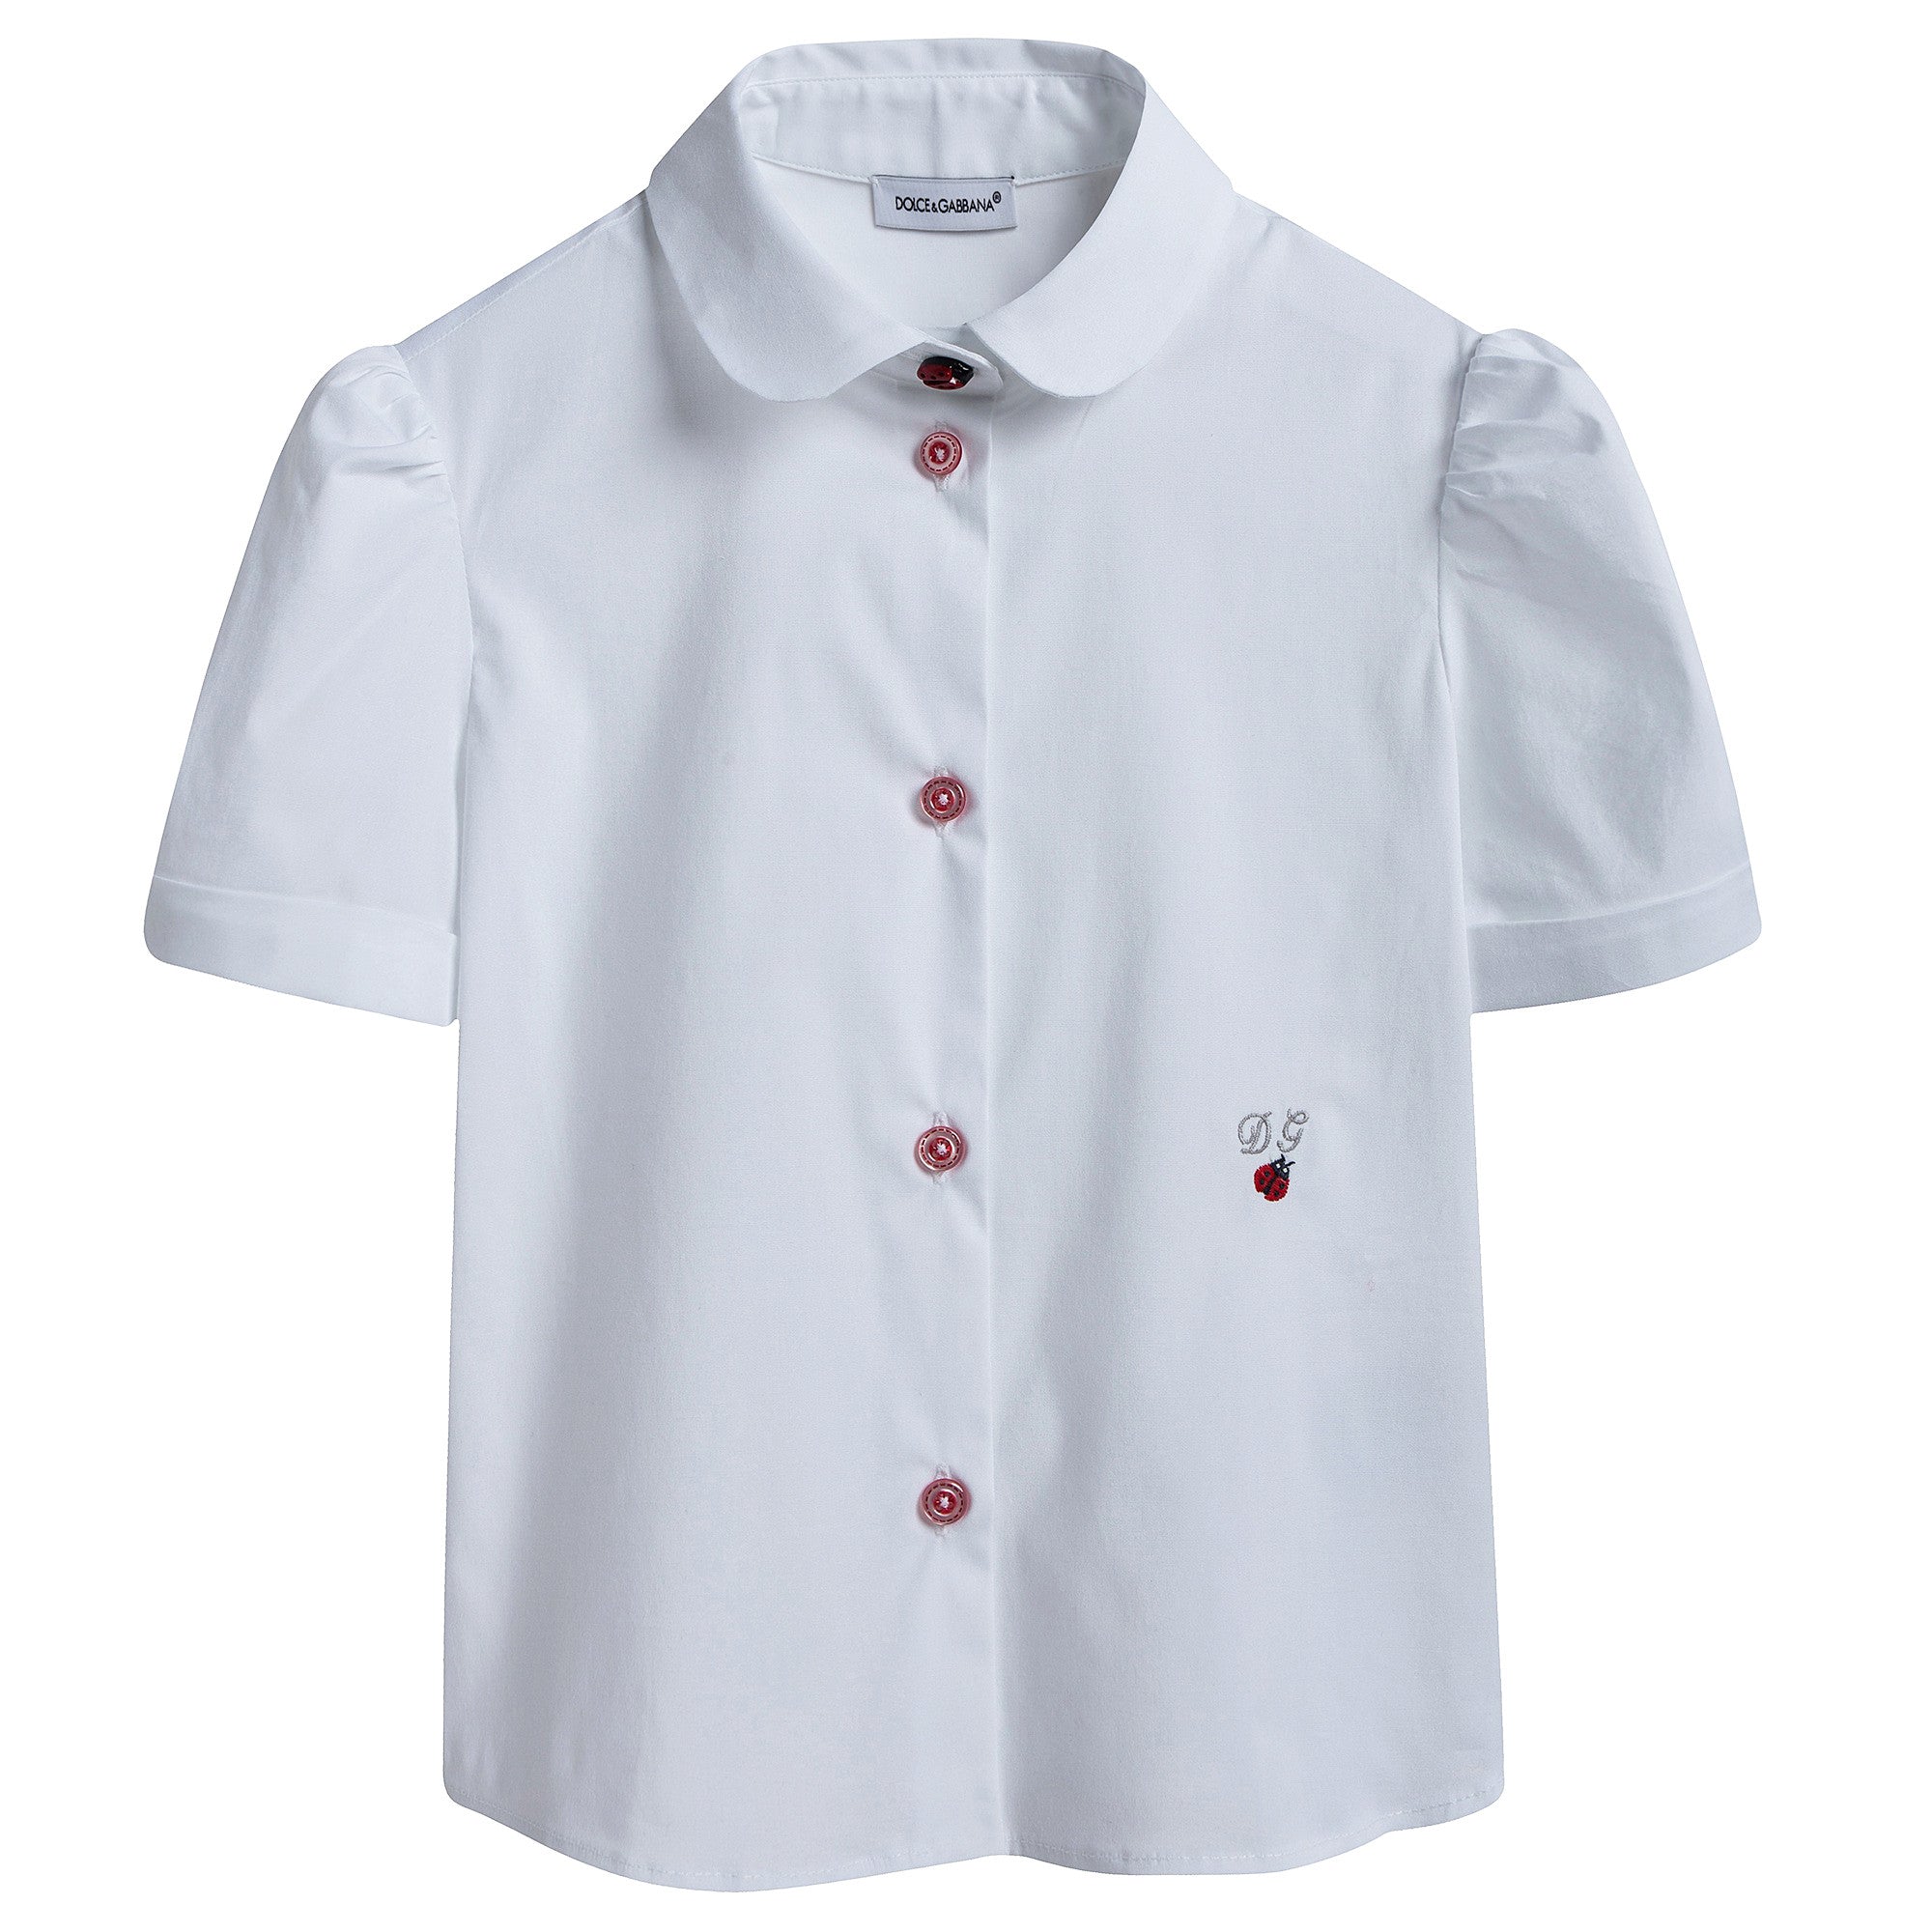 Girls White Cotton Shirt With Heart Trim